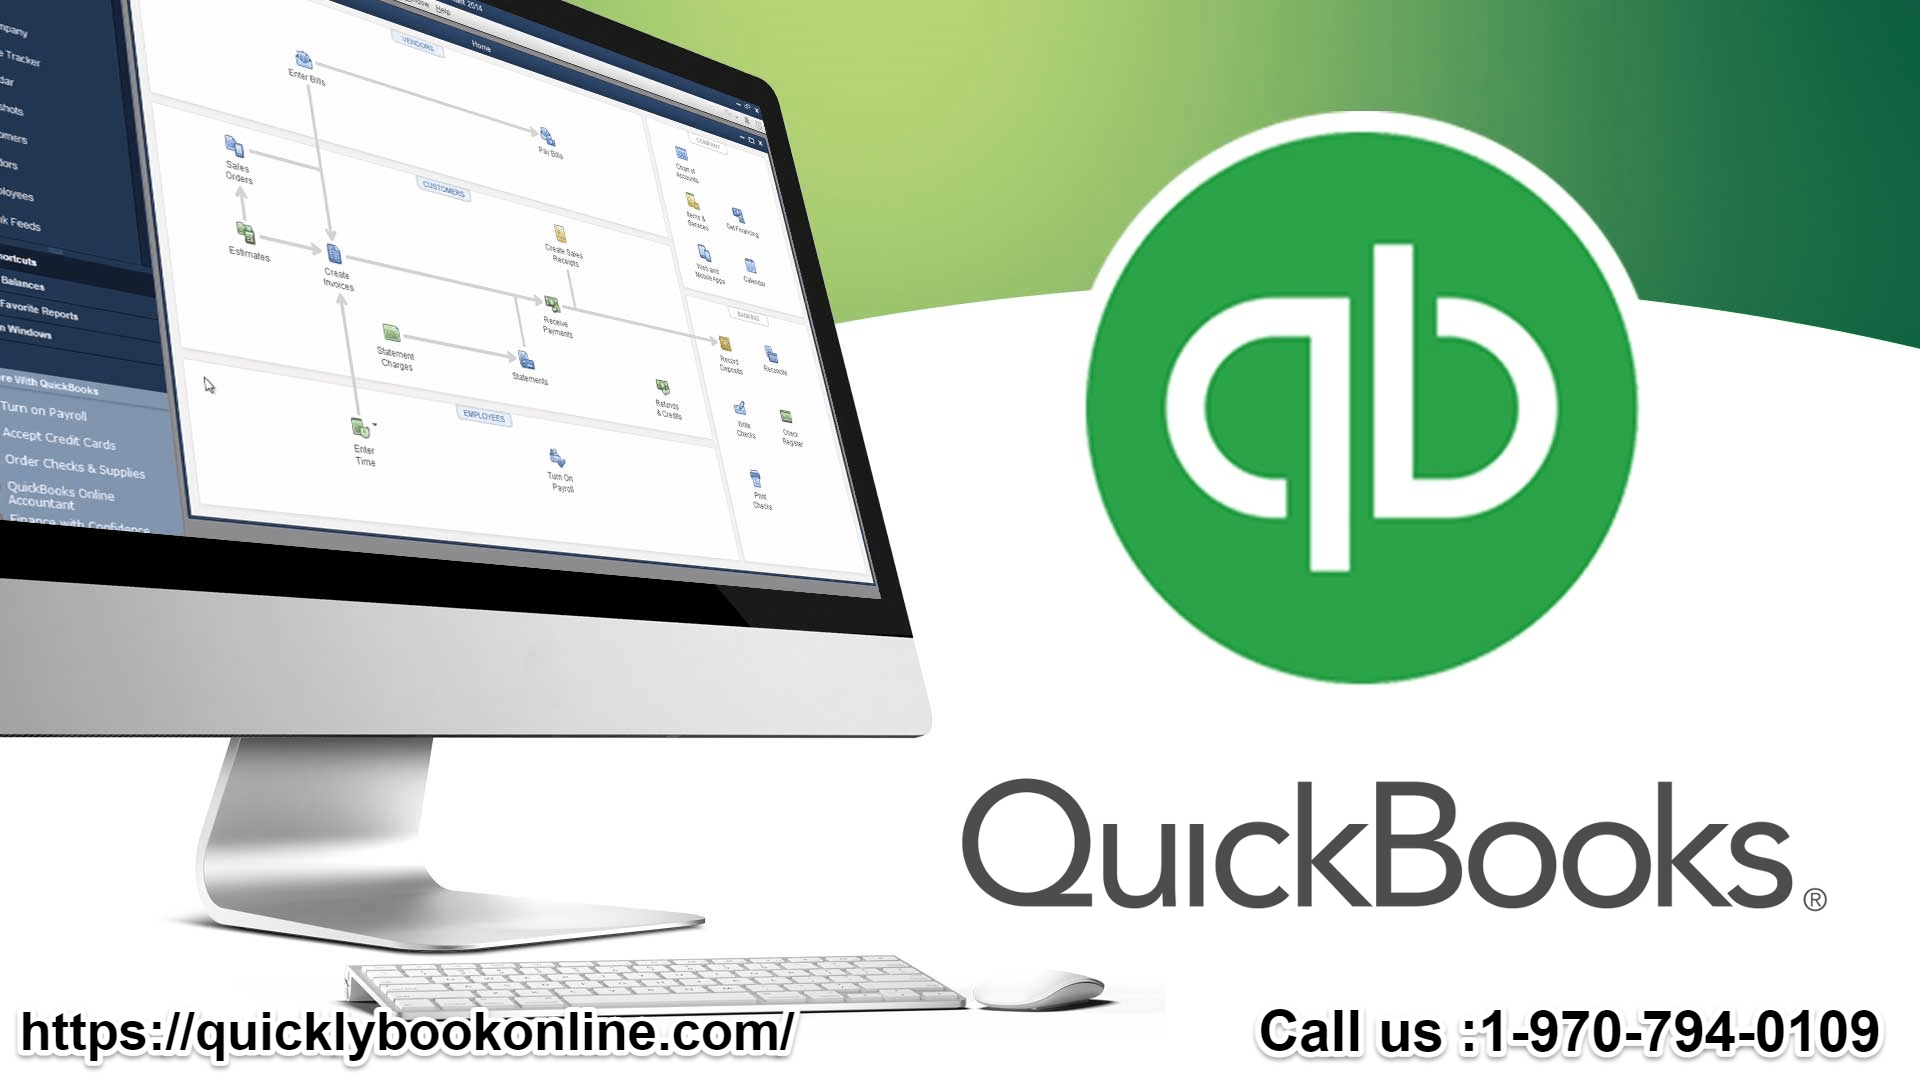 Quickbook support services